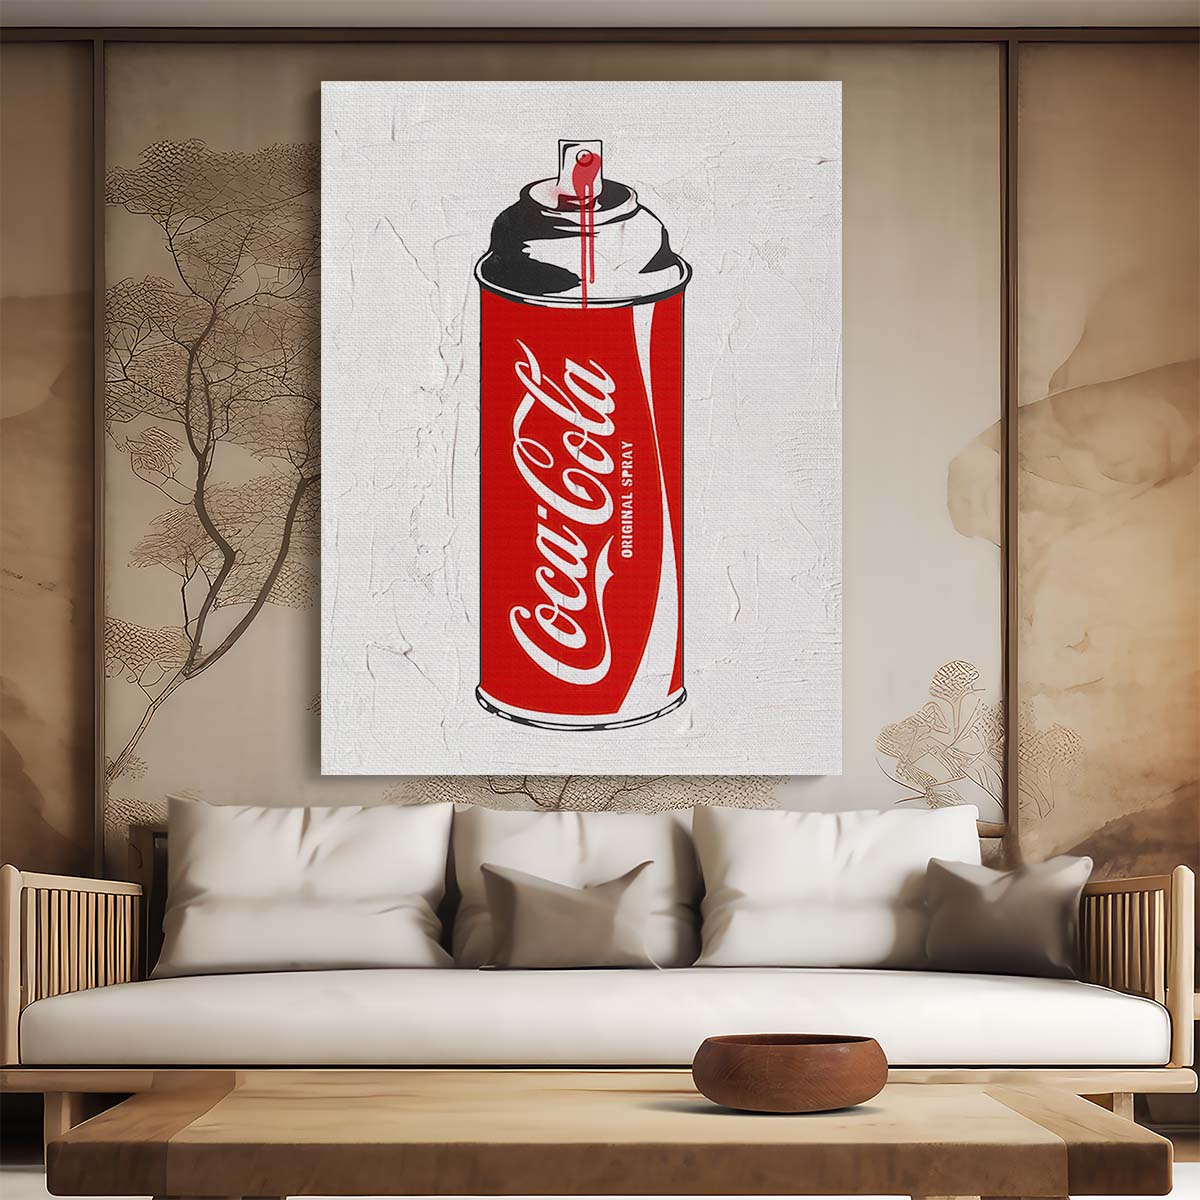 Coca Cola Original Spray Wall Art by Luxuriance Designs. Made in USA.